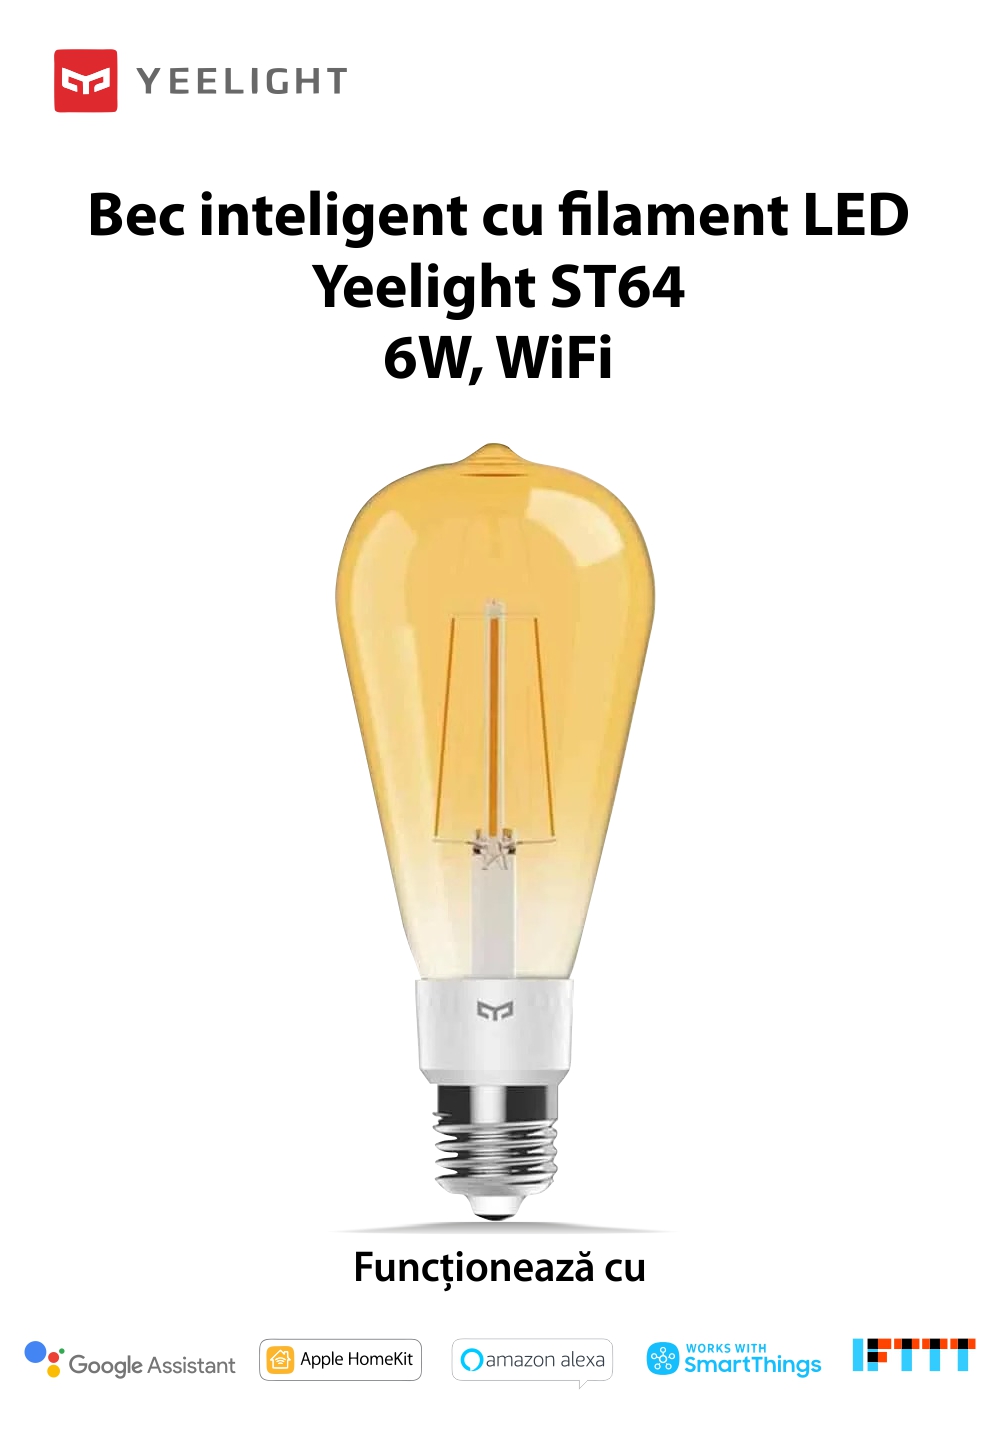 Bec Smart LED Yeelight ST64, Filament, 500 Lumeni, Wireless, E27, Control aplicatie